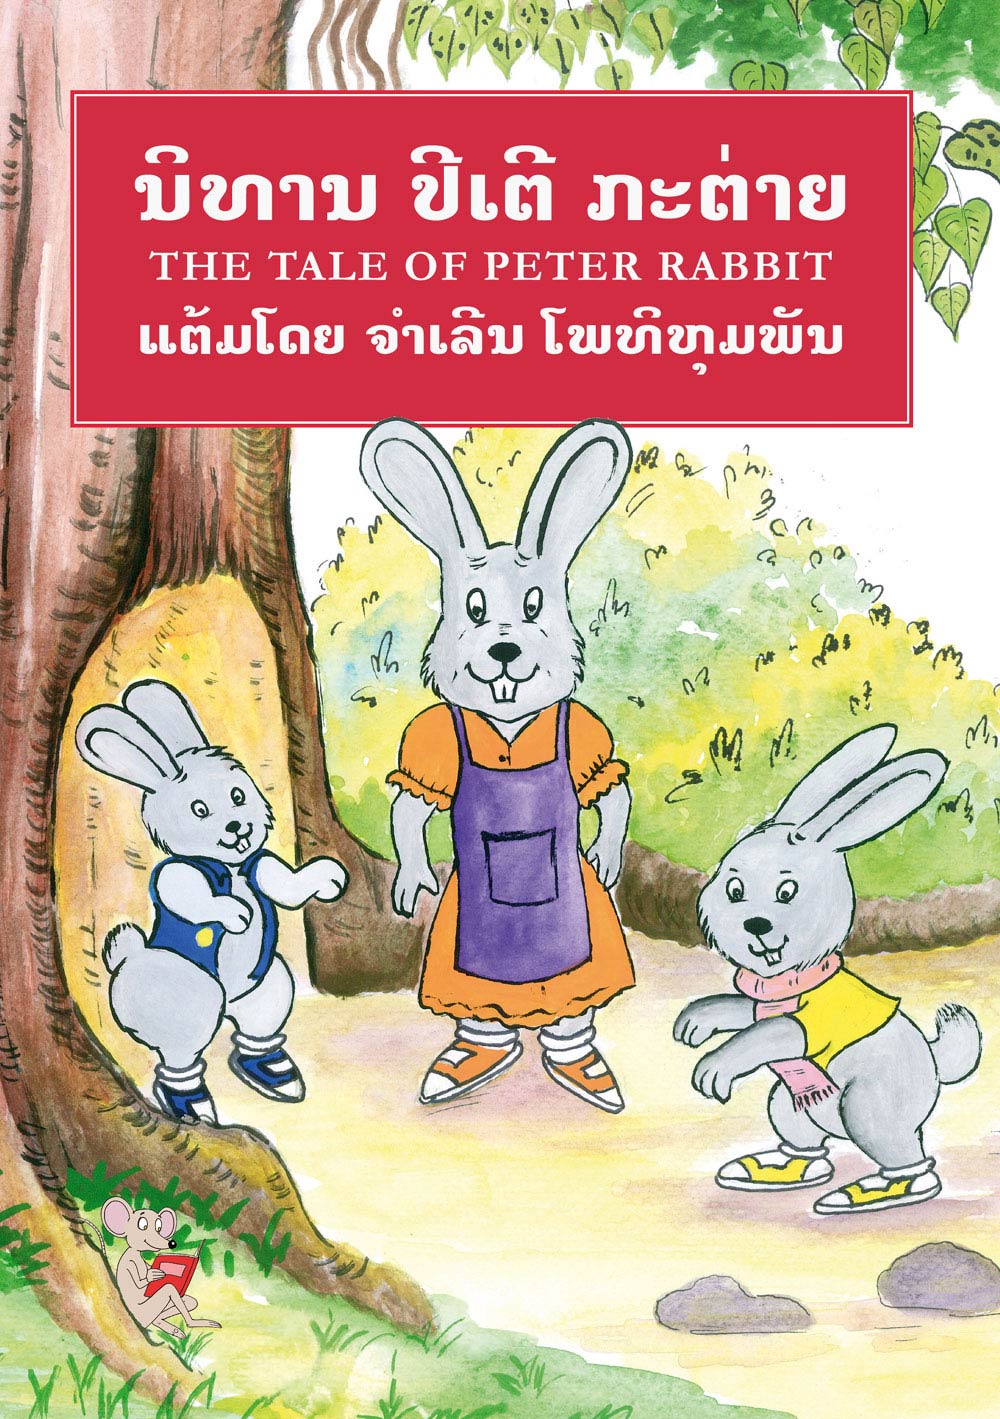 peter rabbit book cover